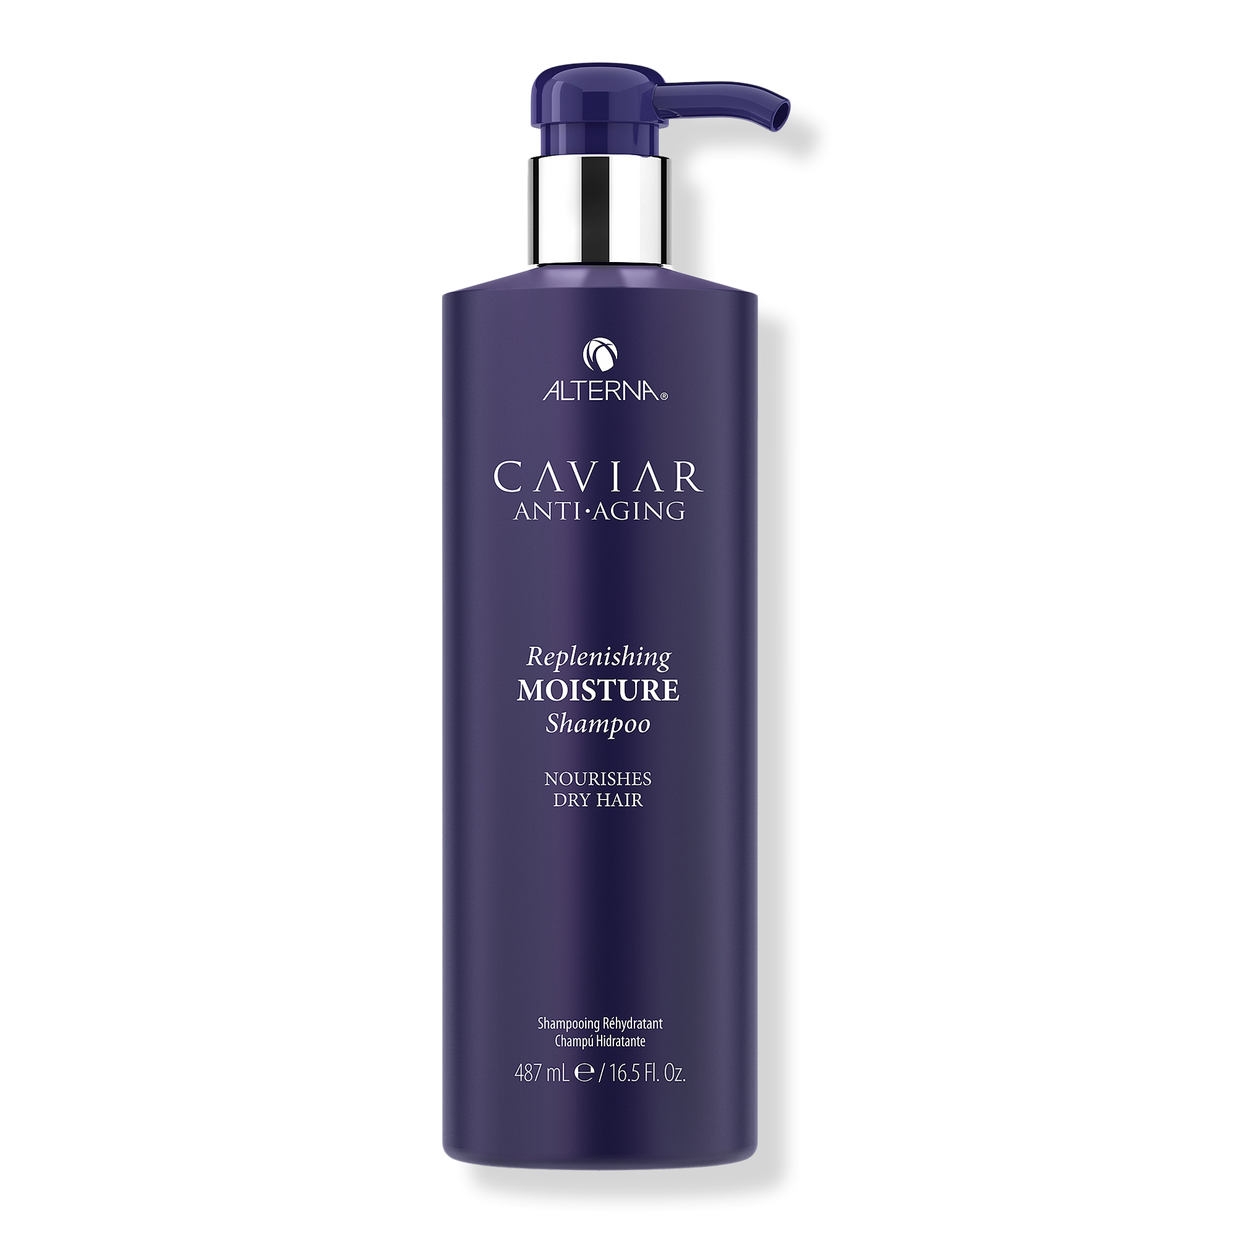 Caviar Anti-Aging Replenishing Moisture Shampoo - Alterna Ulta Beauty